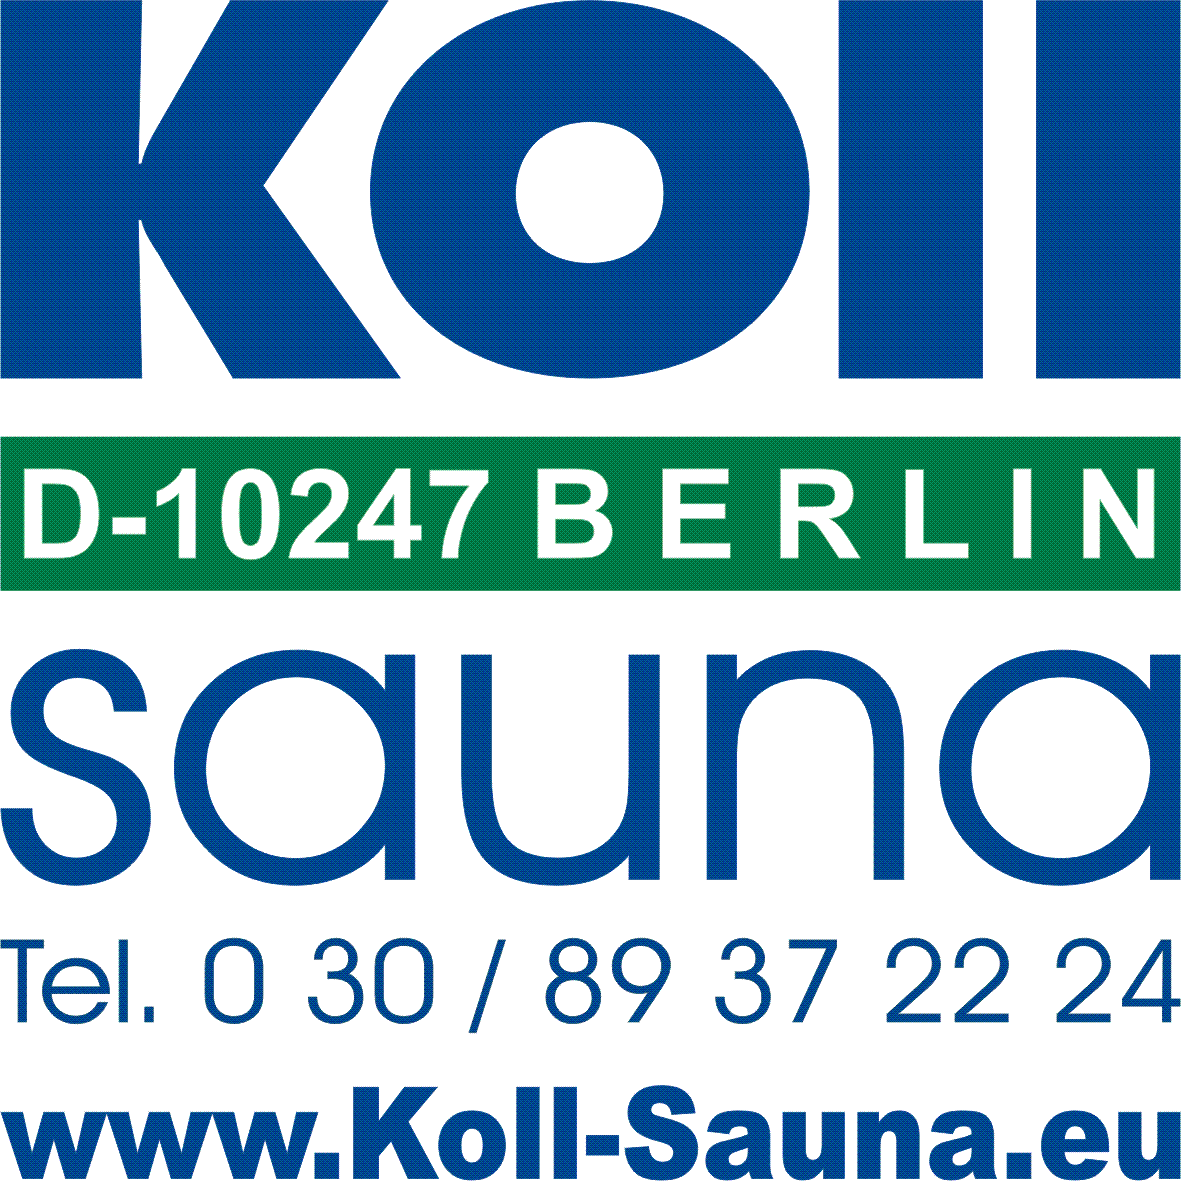 Koll Bad Sauna Logo München Berlin Delbrück OWK Saunahersteller Saunabau